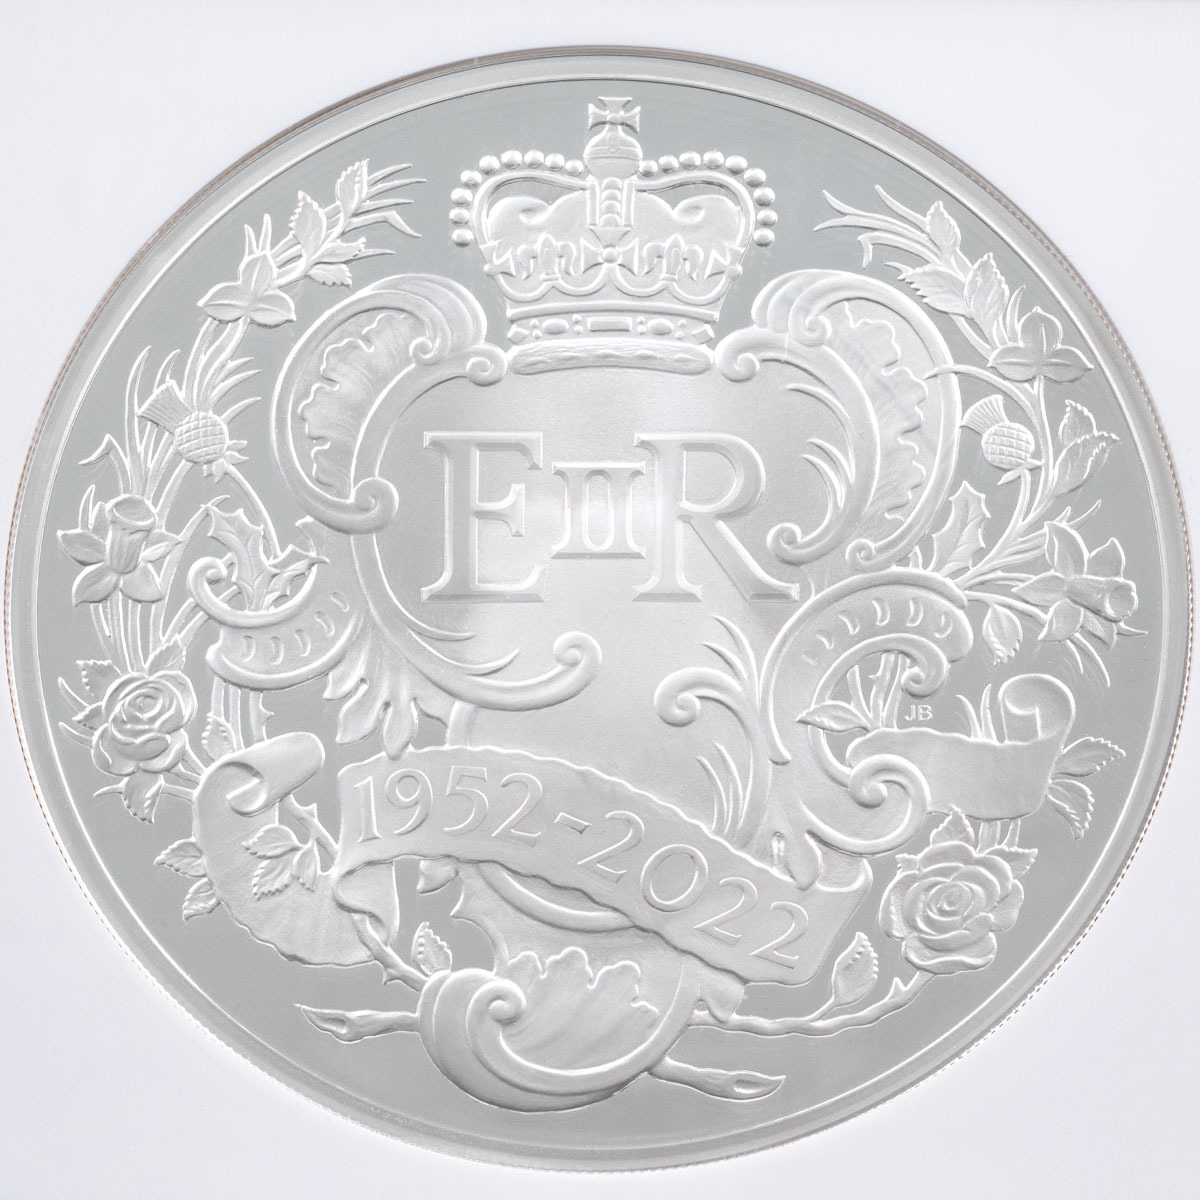 UK22PJKS 2022 Queen Elizabeth II Platinum Jubilee One Kilogram Silver Proof Coin NGC Graded PF 70 Ultra Cameo First 20 Struck Reverse